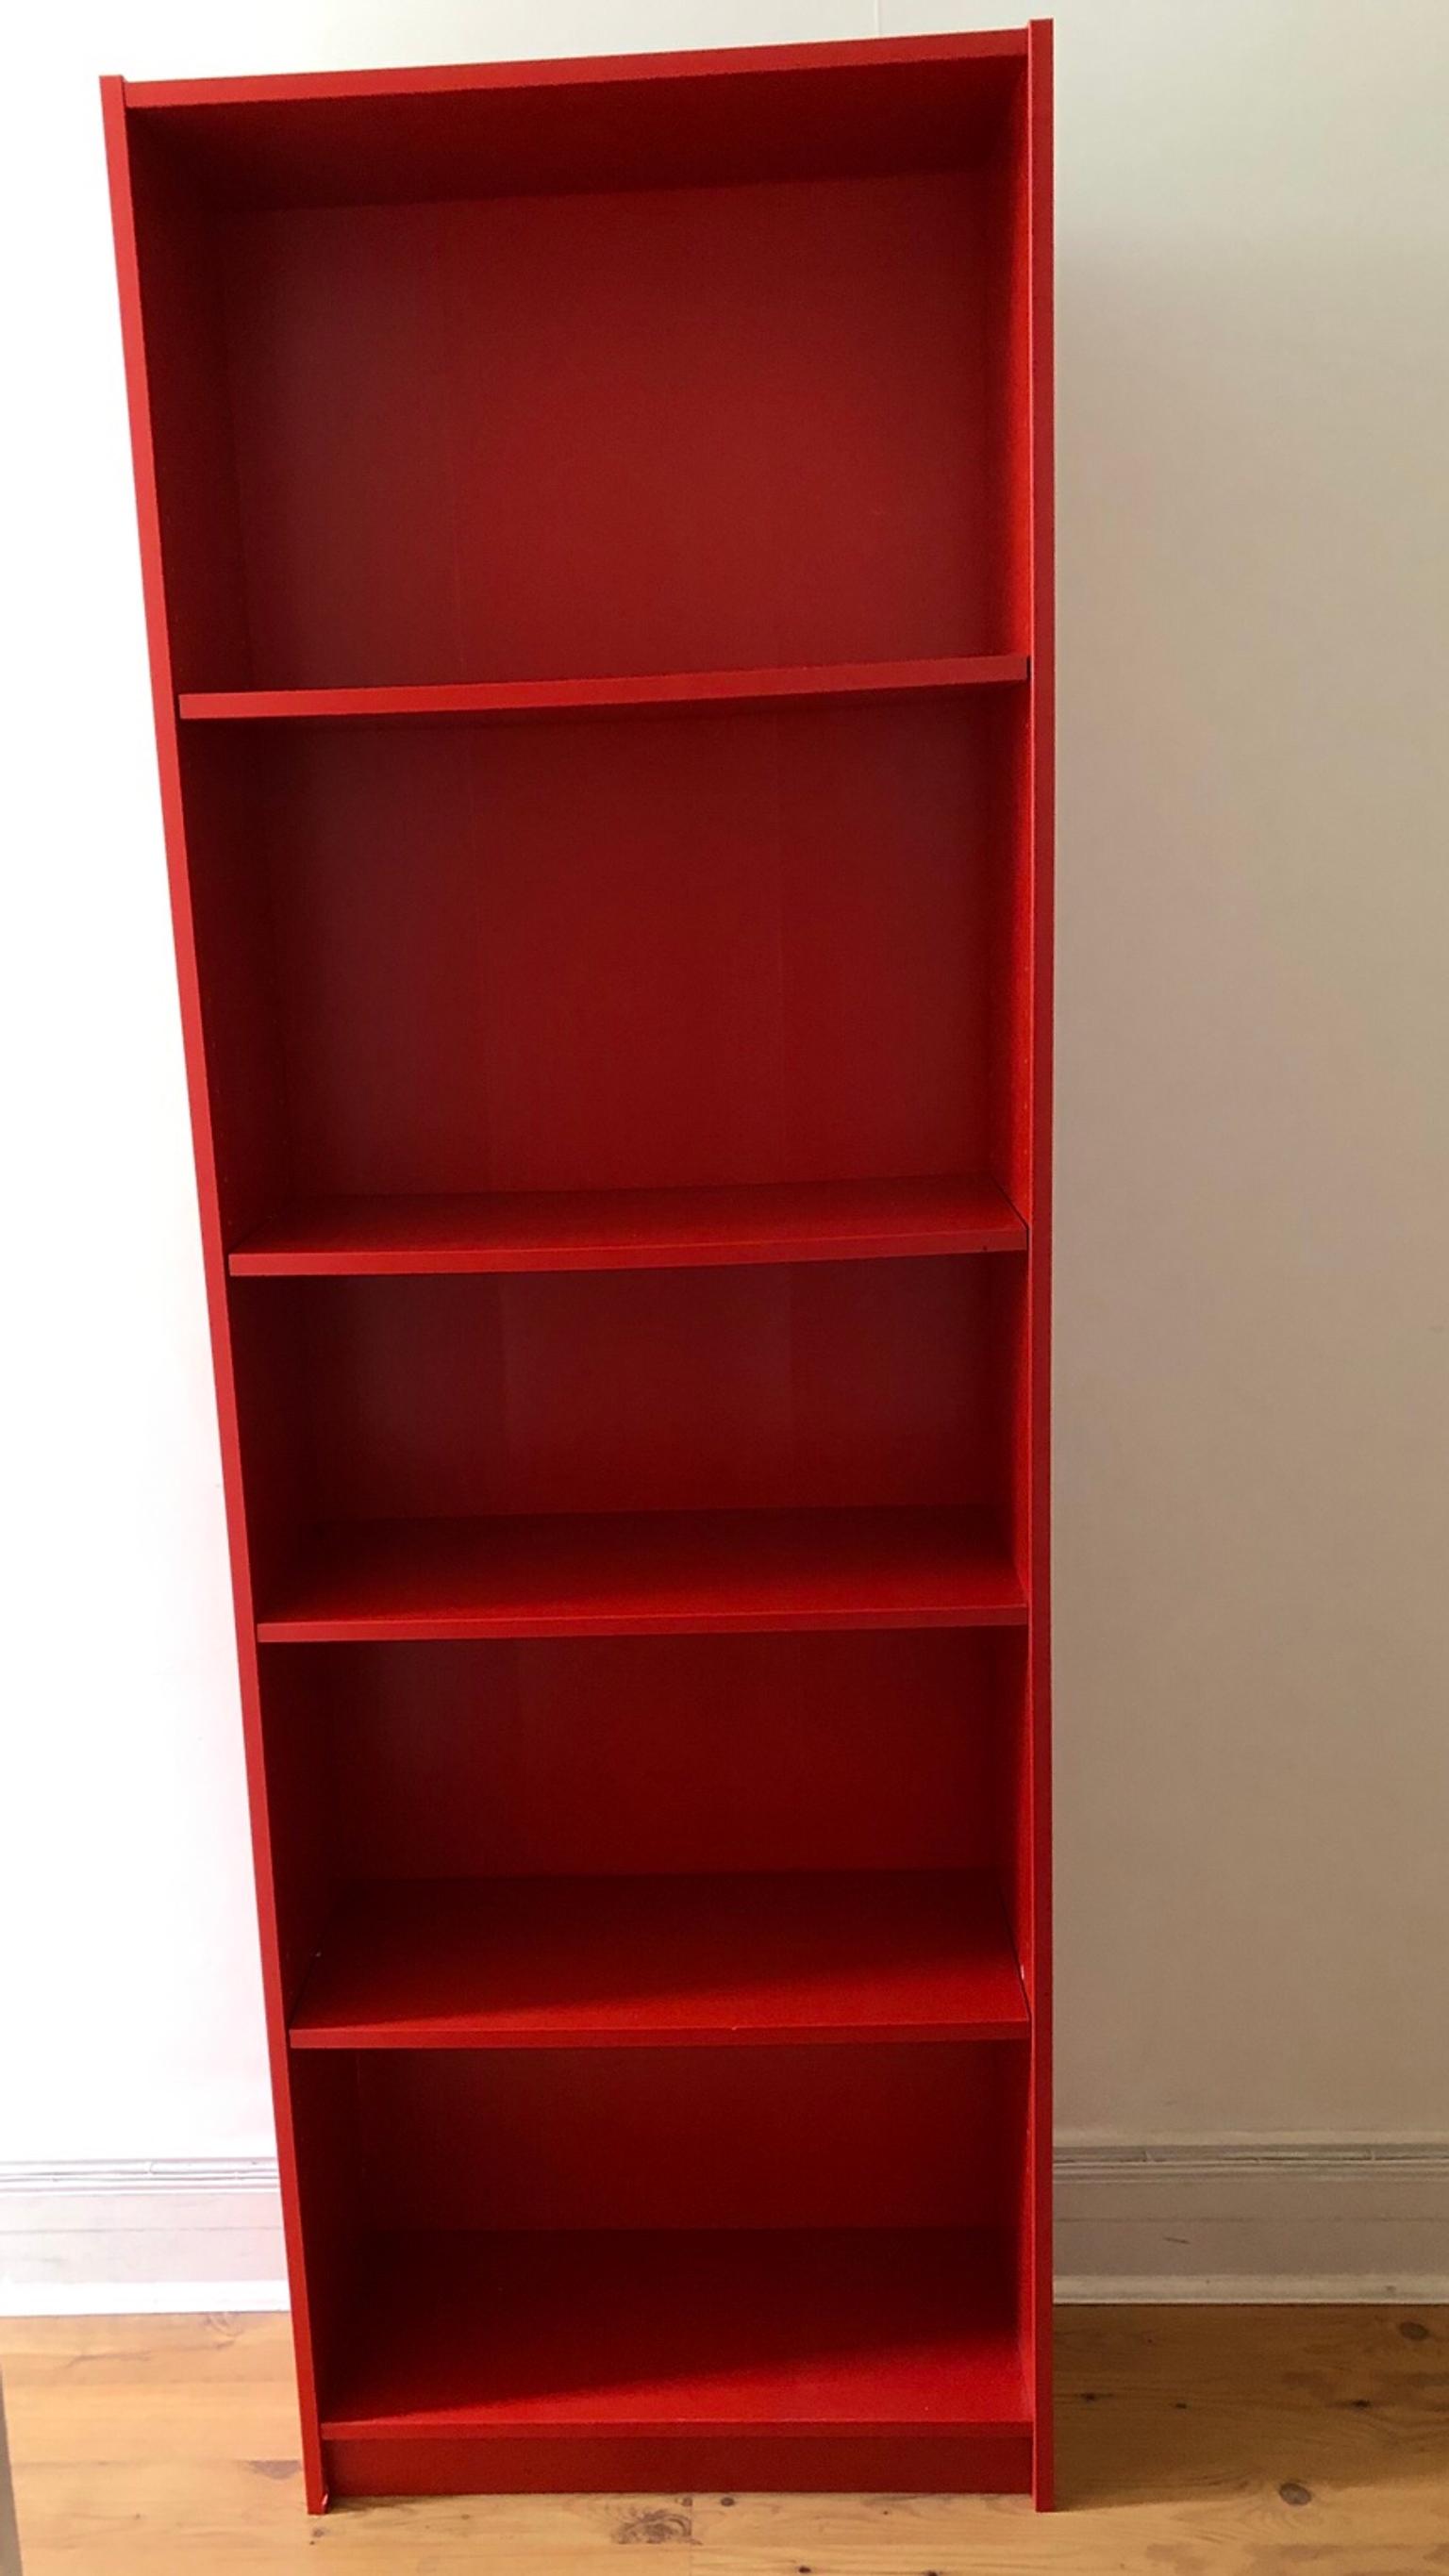 Ikea Bookcase Red In Sw16 London Fur 25 00 Zum Verkauf Shpock At